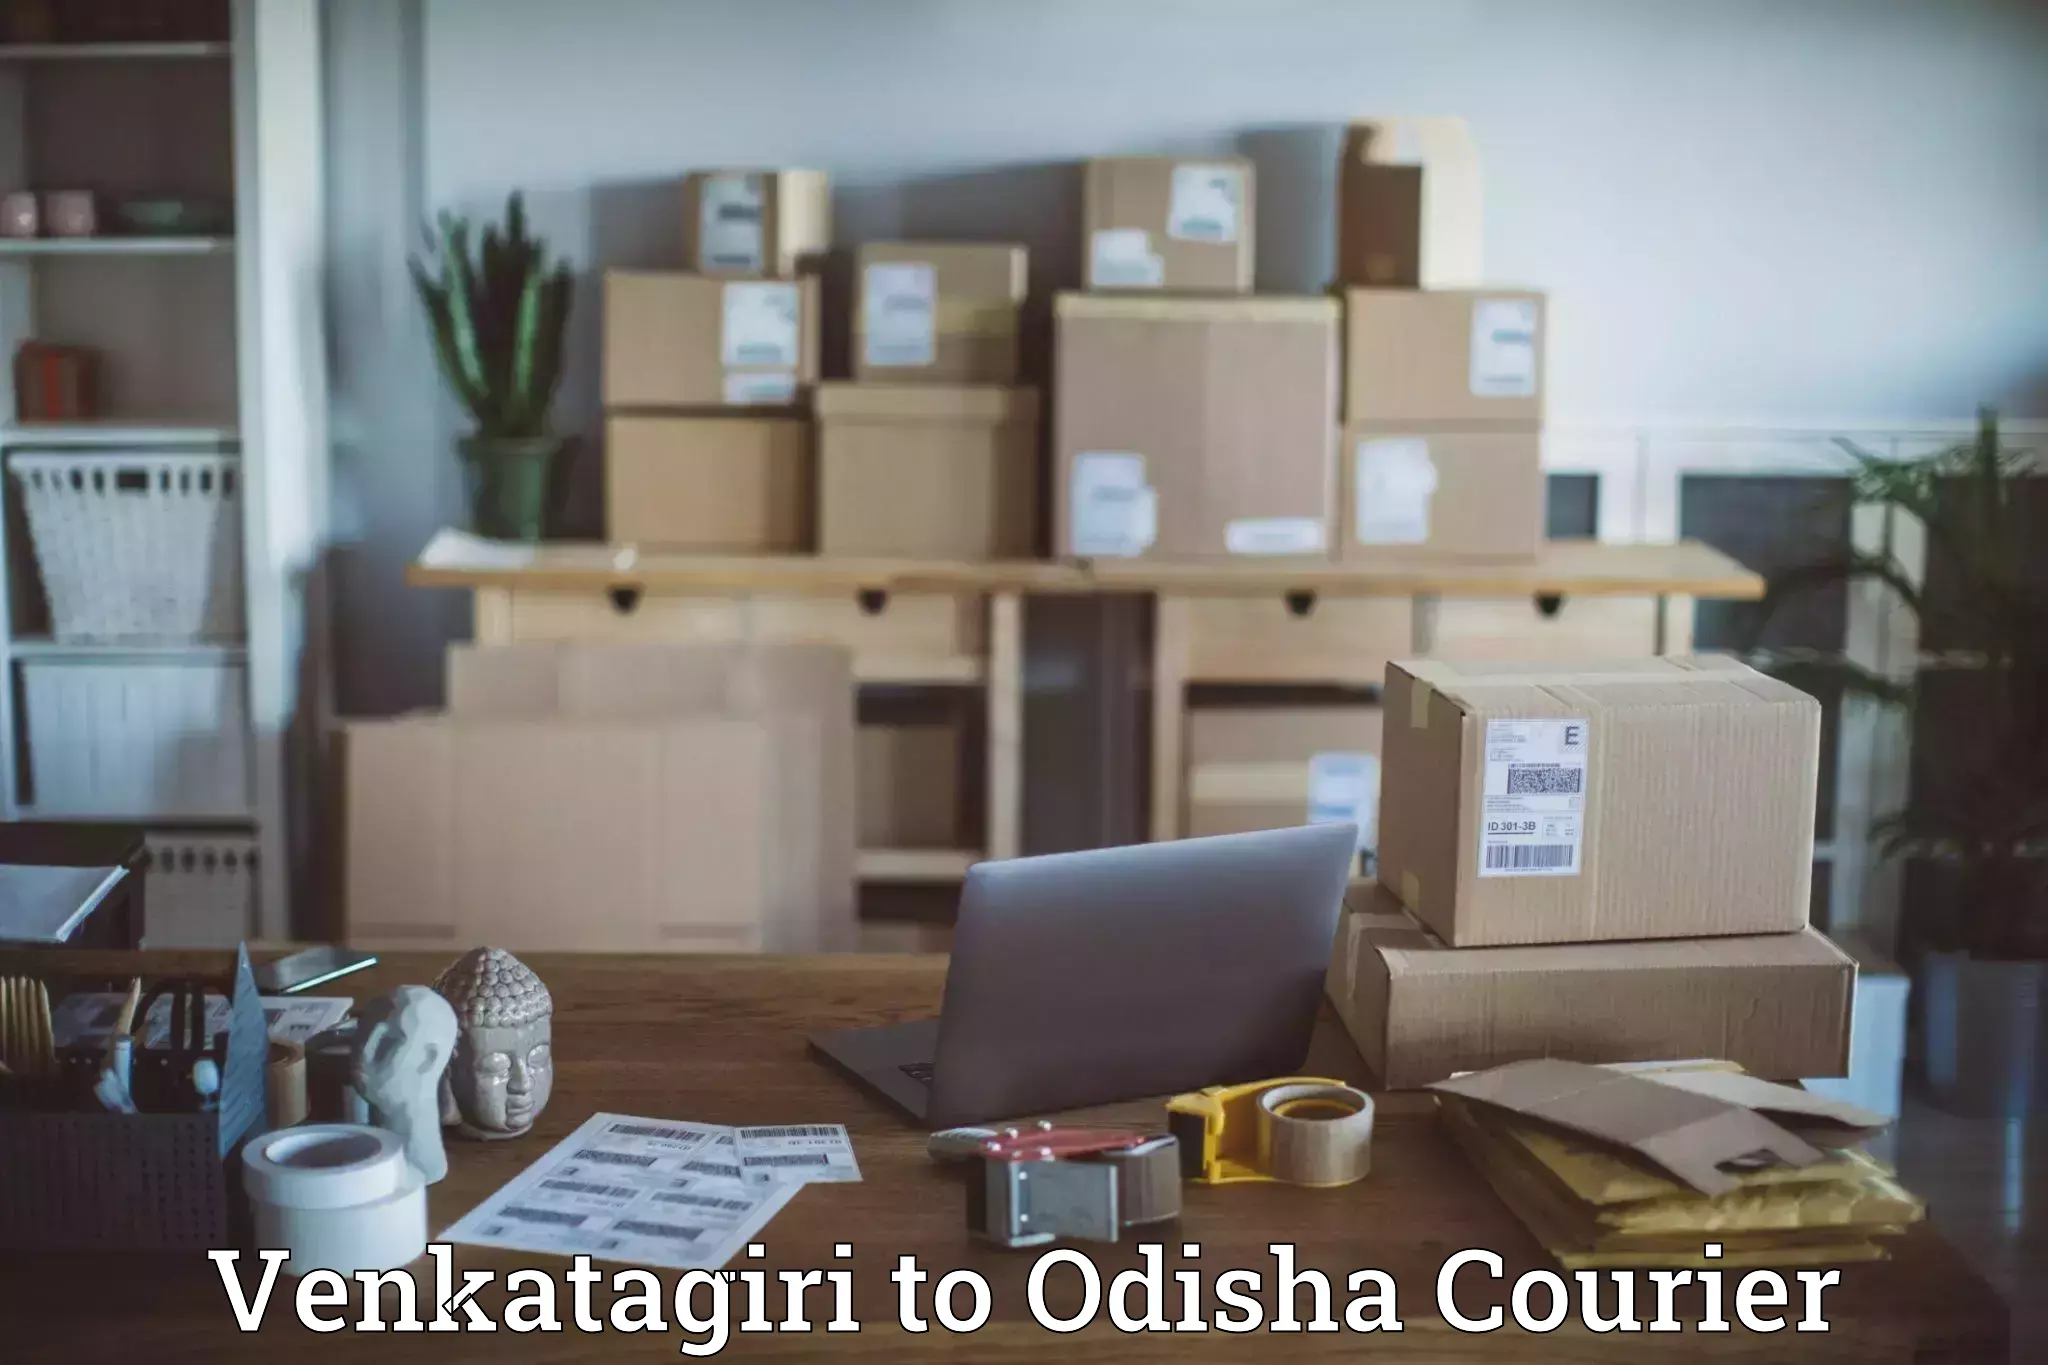 State-of-the-art courier technology Venkatagiri to Sohela